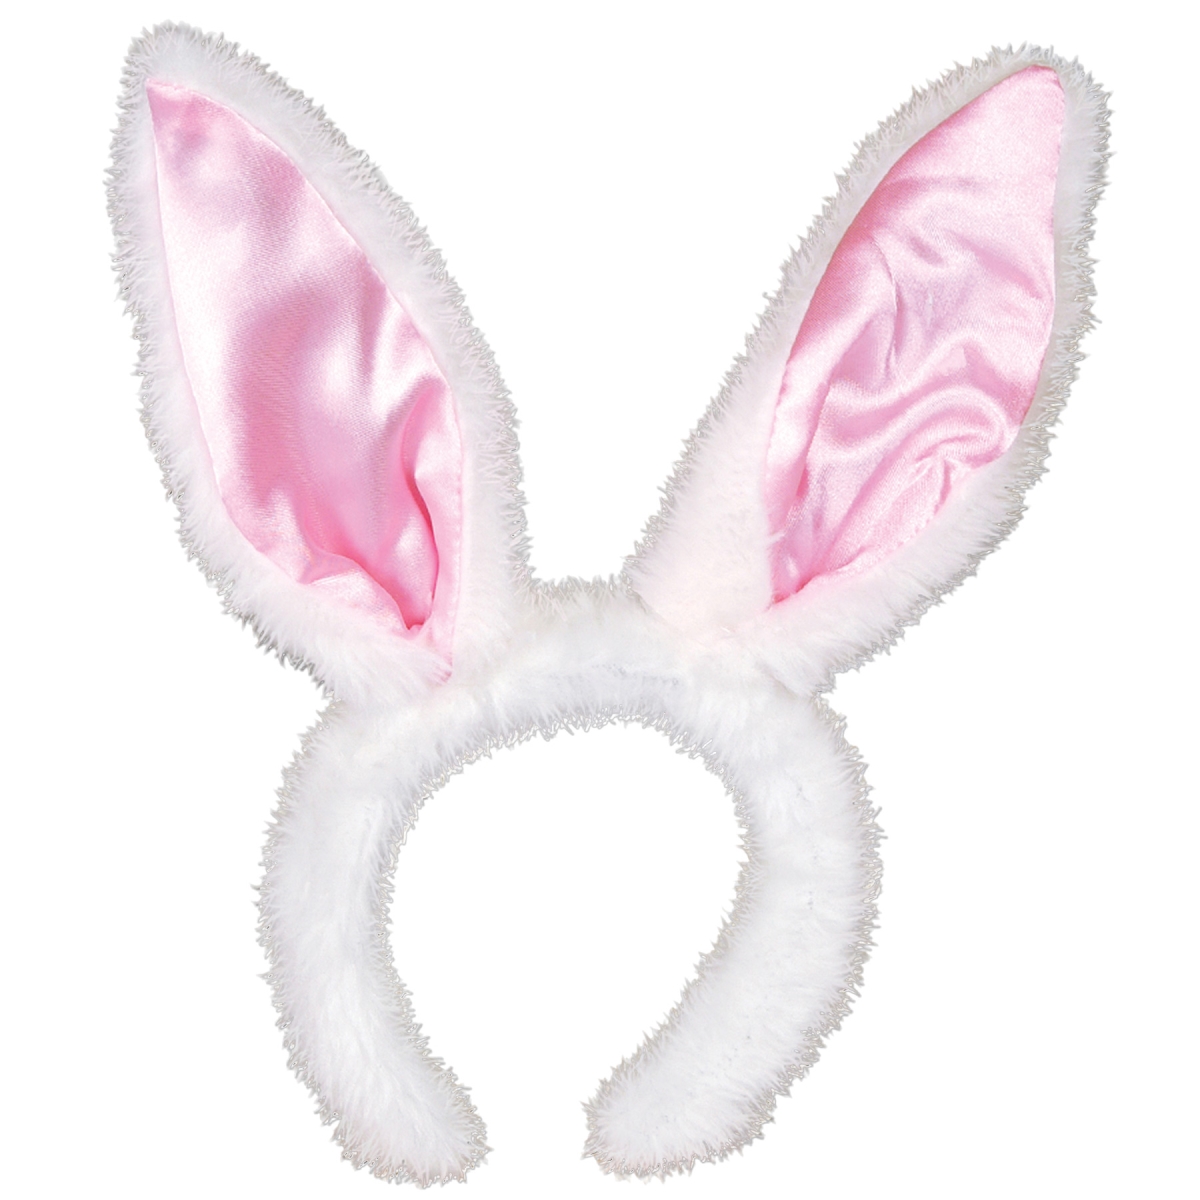 Bg40761 Bunny Ears White With Pink Satin Headband